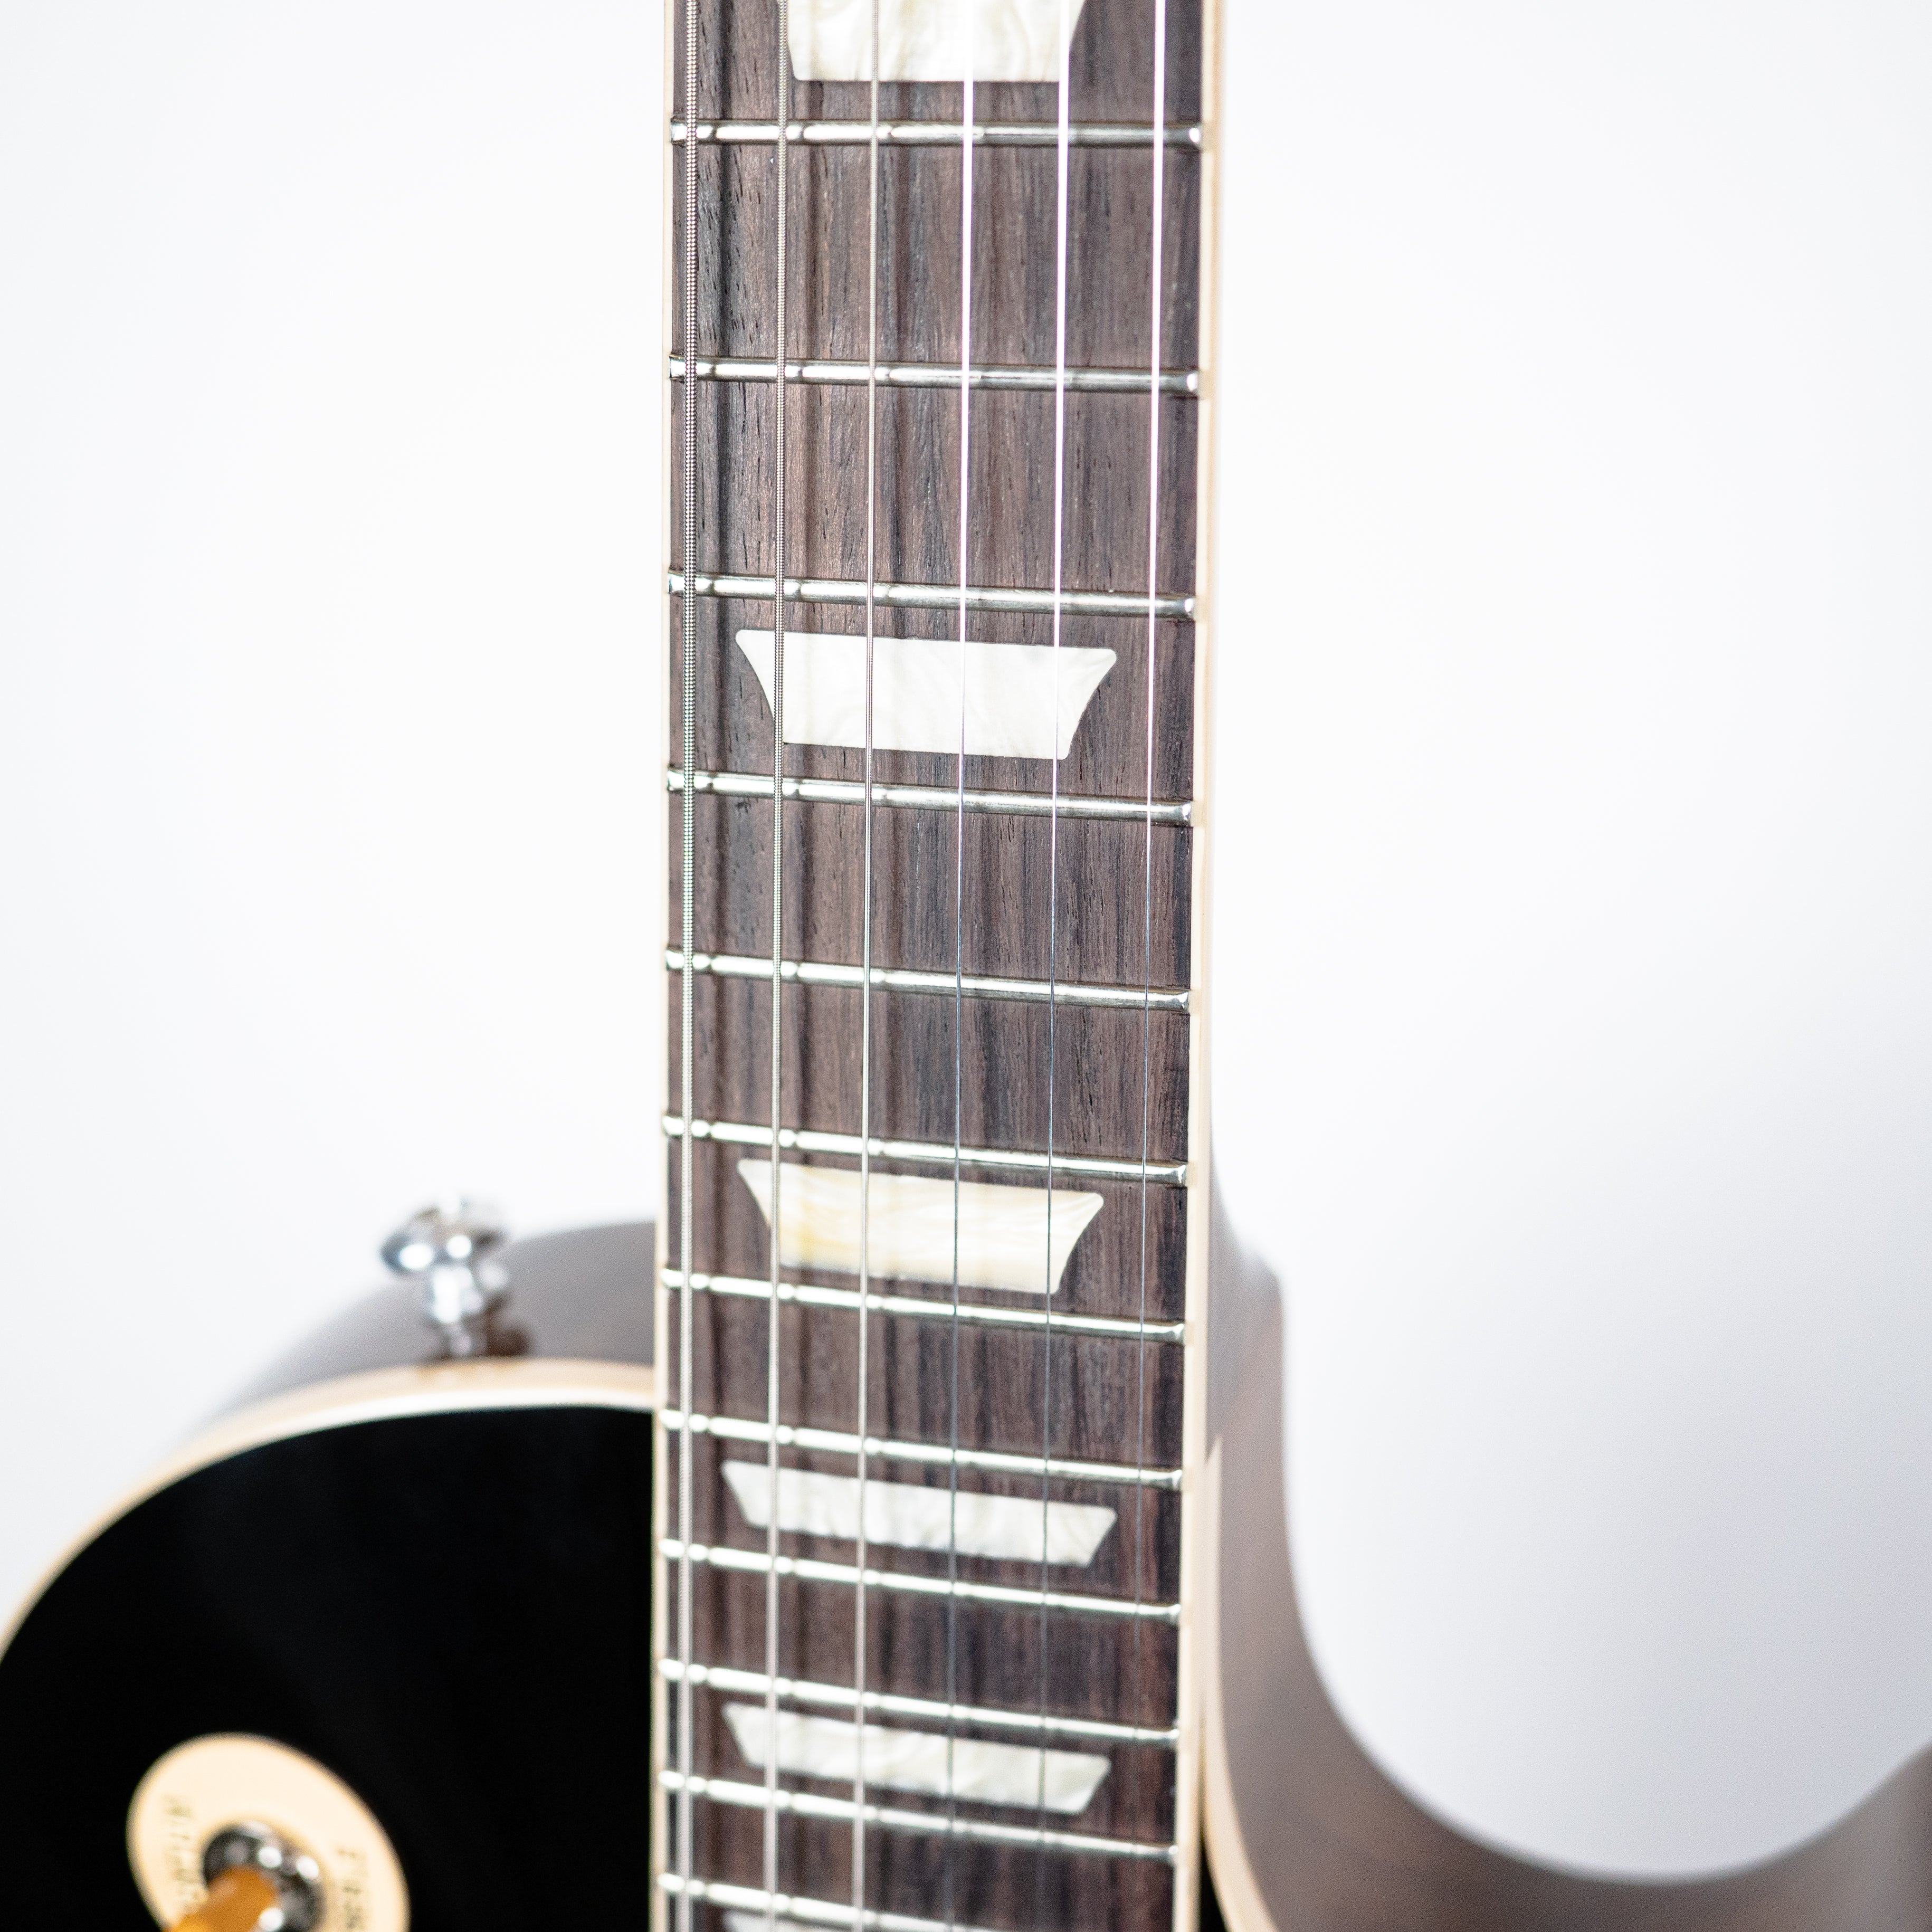 Gibson Les Paul Standard 50s Figured Top Tobacco Burst